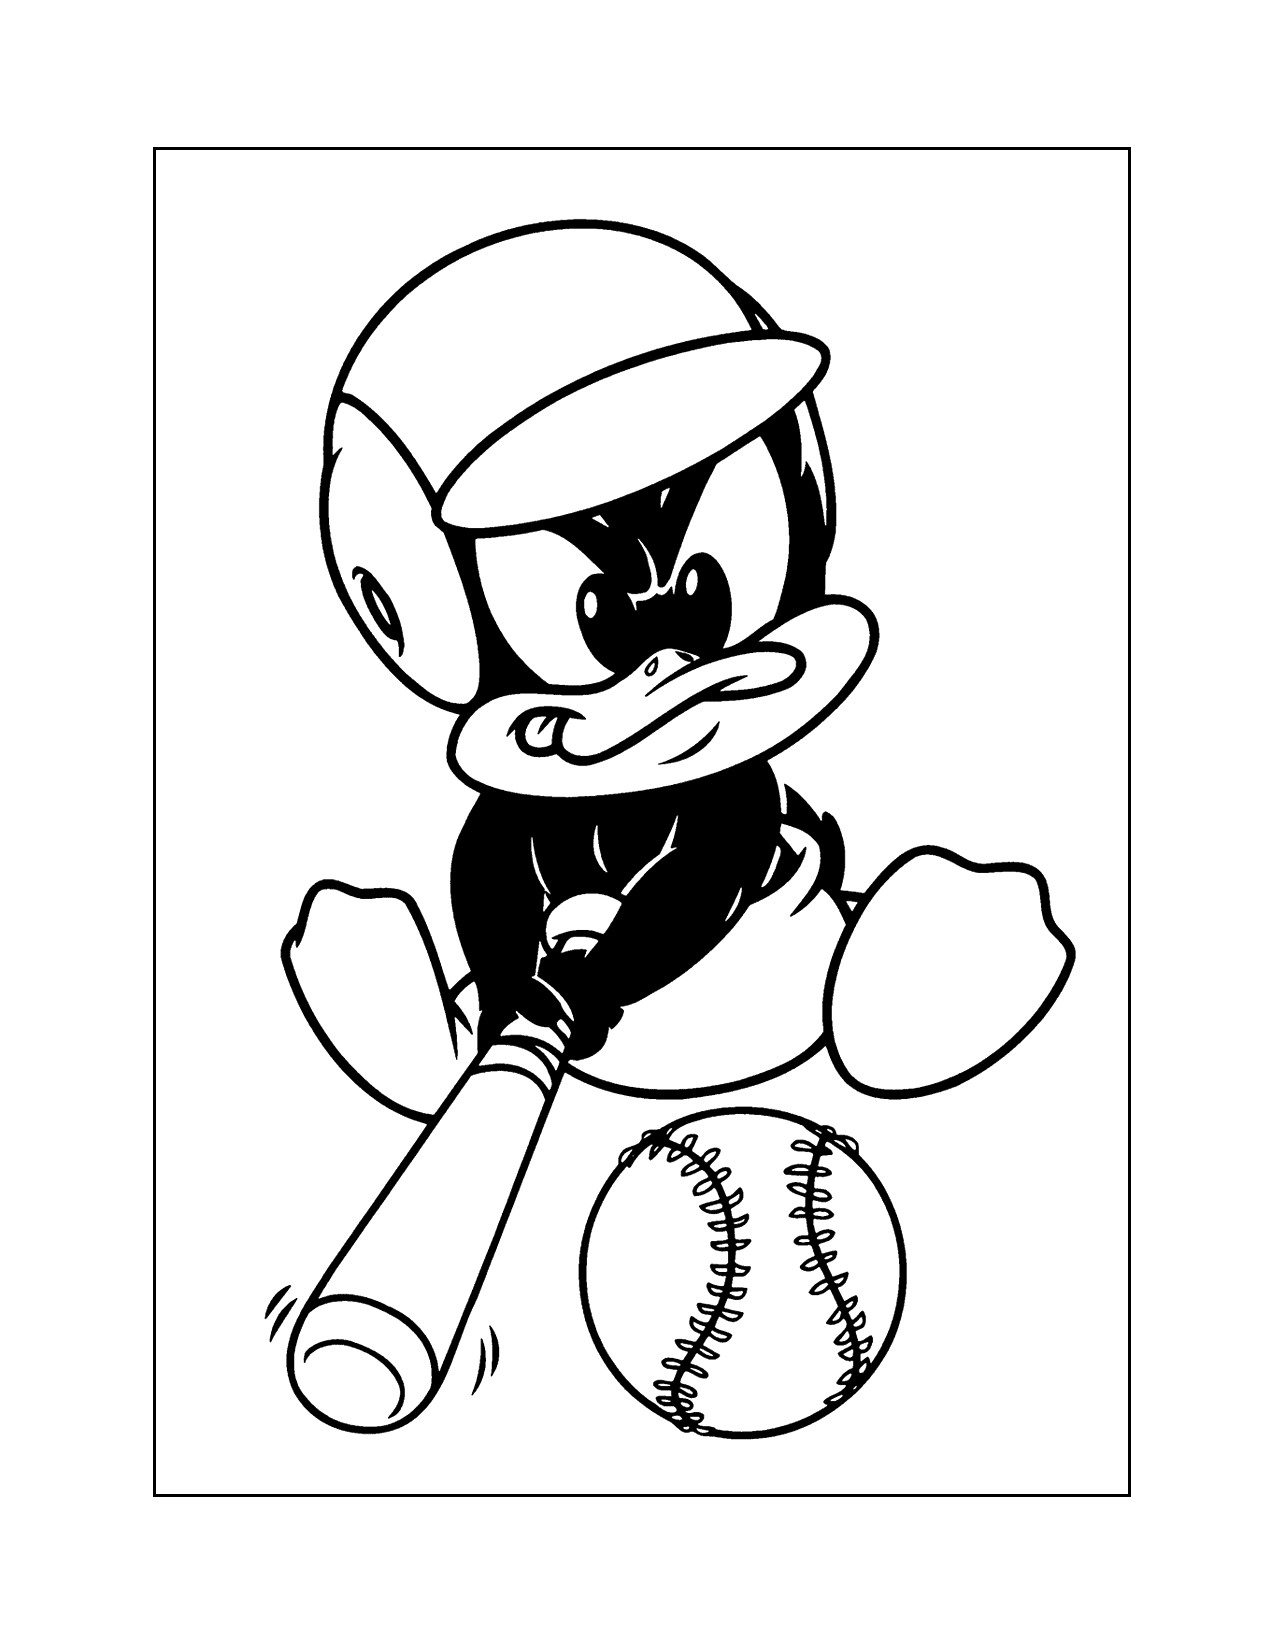 Baby Daffy Playing Baseball Coloring Page